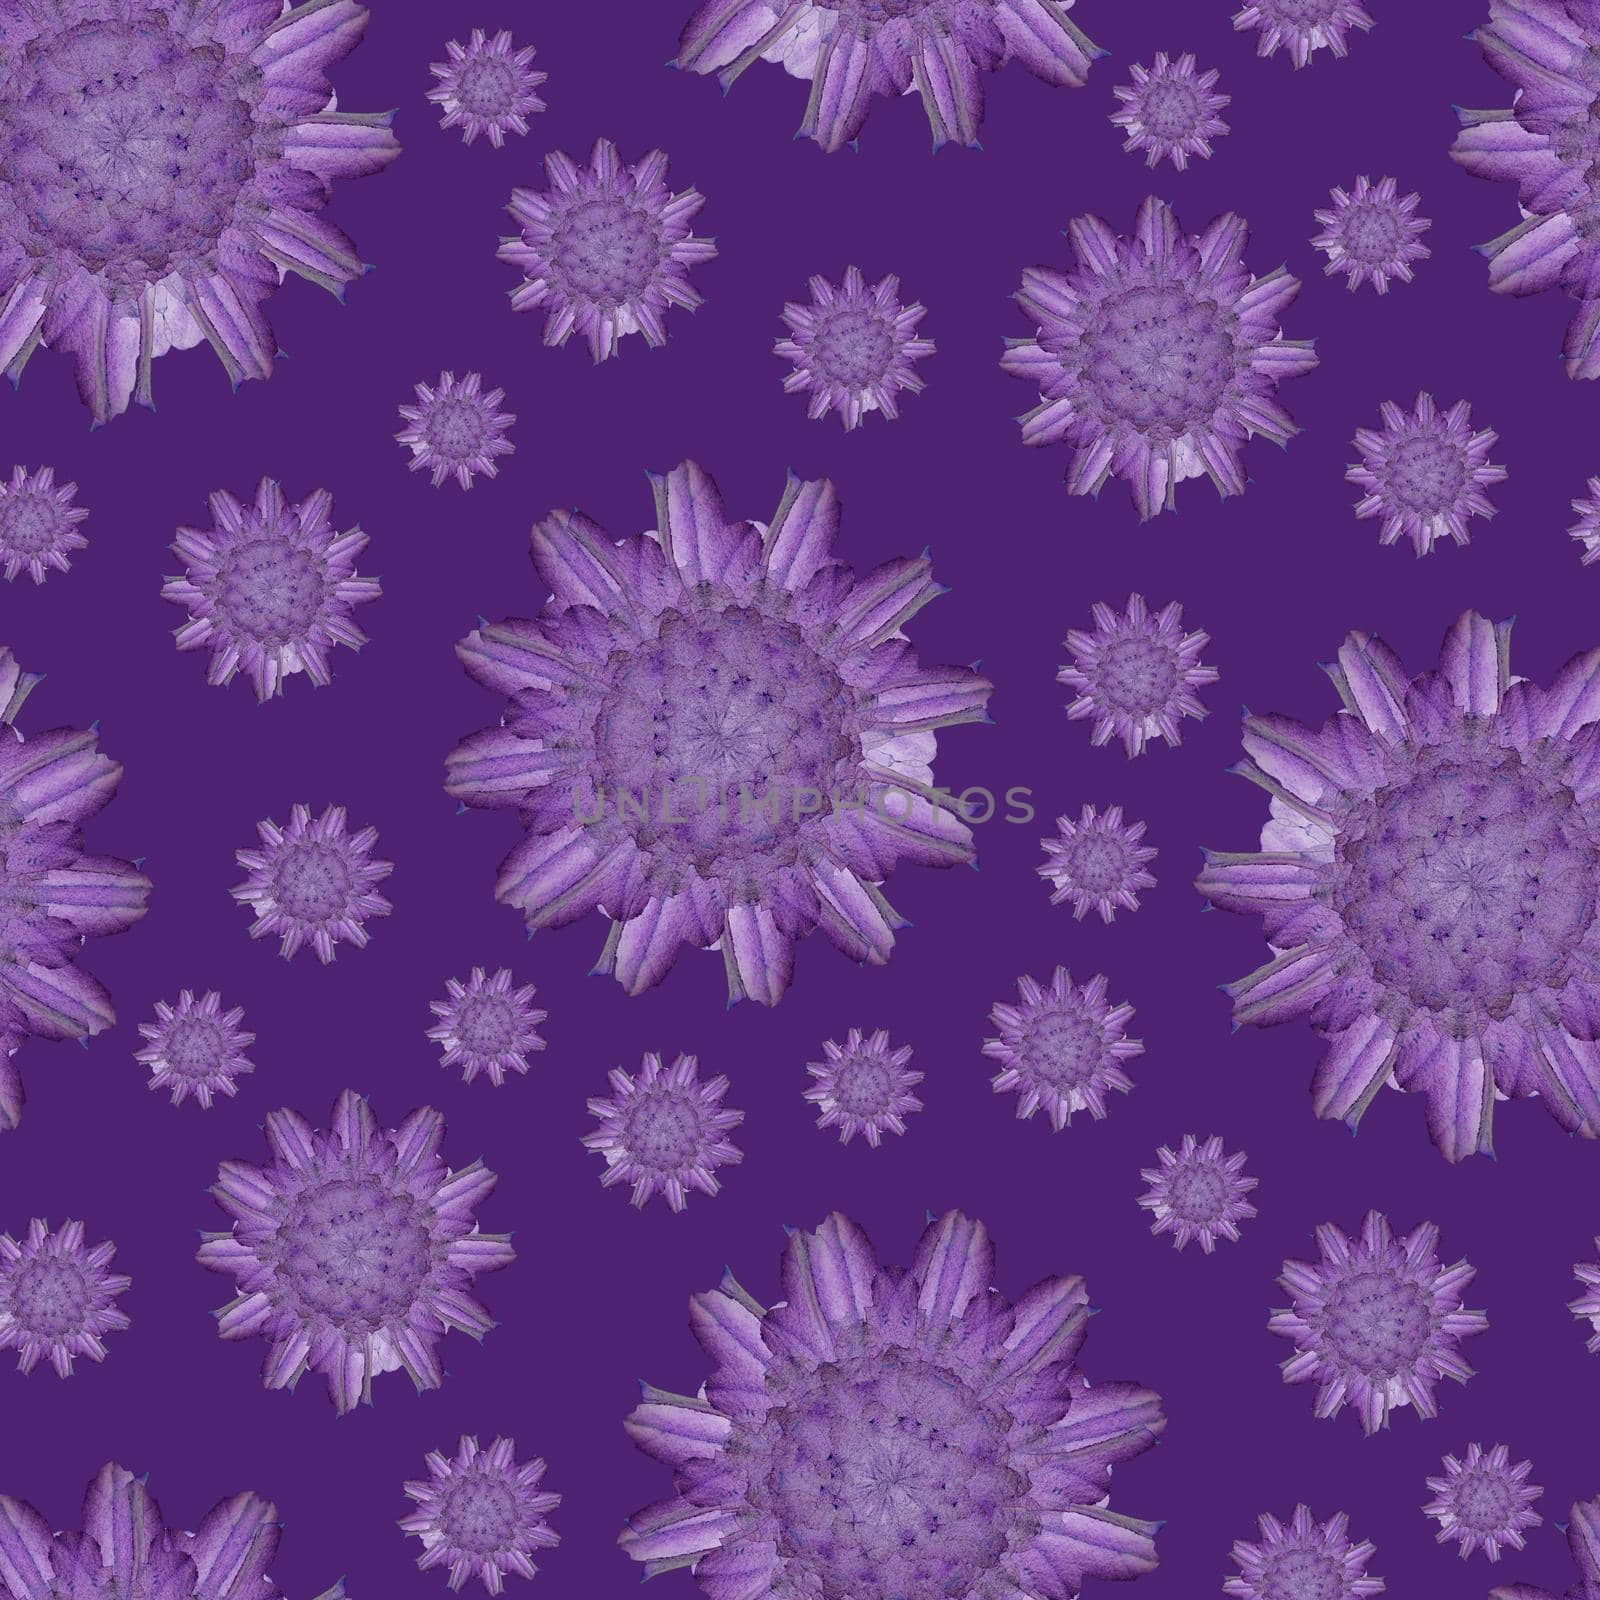 Floral Repeat Pattern. Violet Flower on Purple Background. Floral Abstract Background. Flower Seamless Pattern.